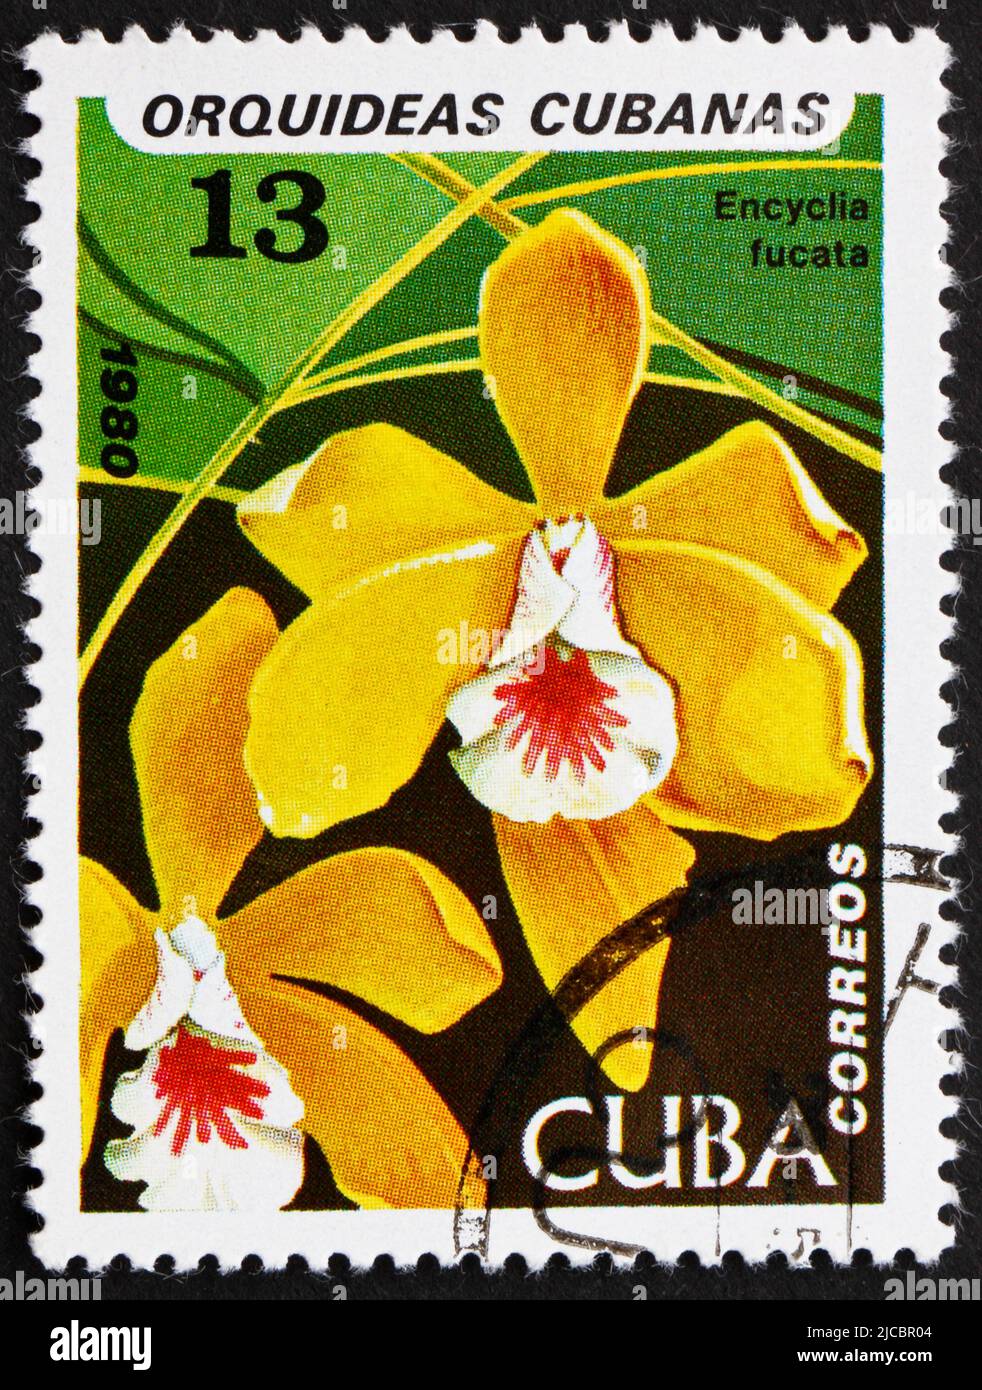 CUBA - CIRCA 1980: a stamp printed in the Cuba shows Brown Veined Encyclia, Encyclia Fucata, Orchid, circa 1980 Stock Photo